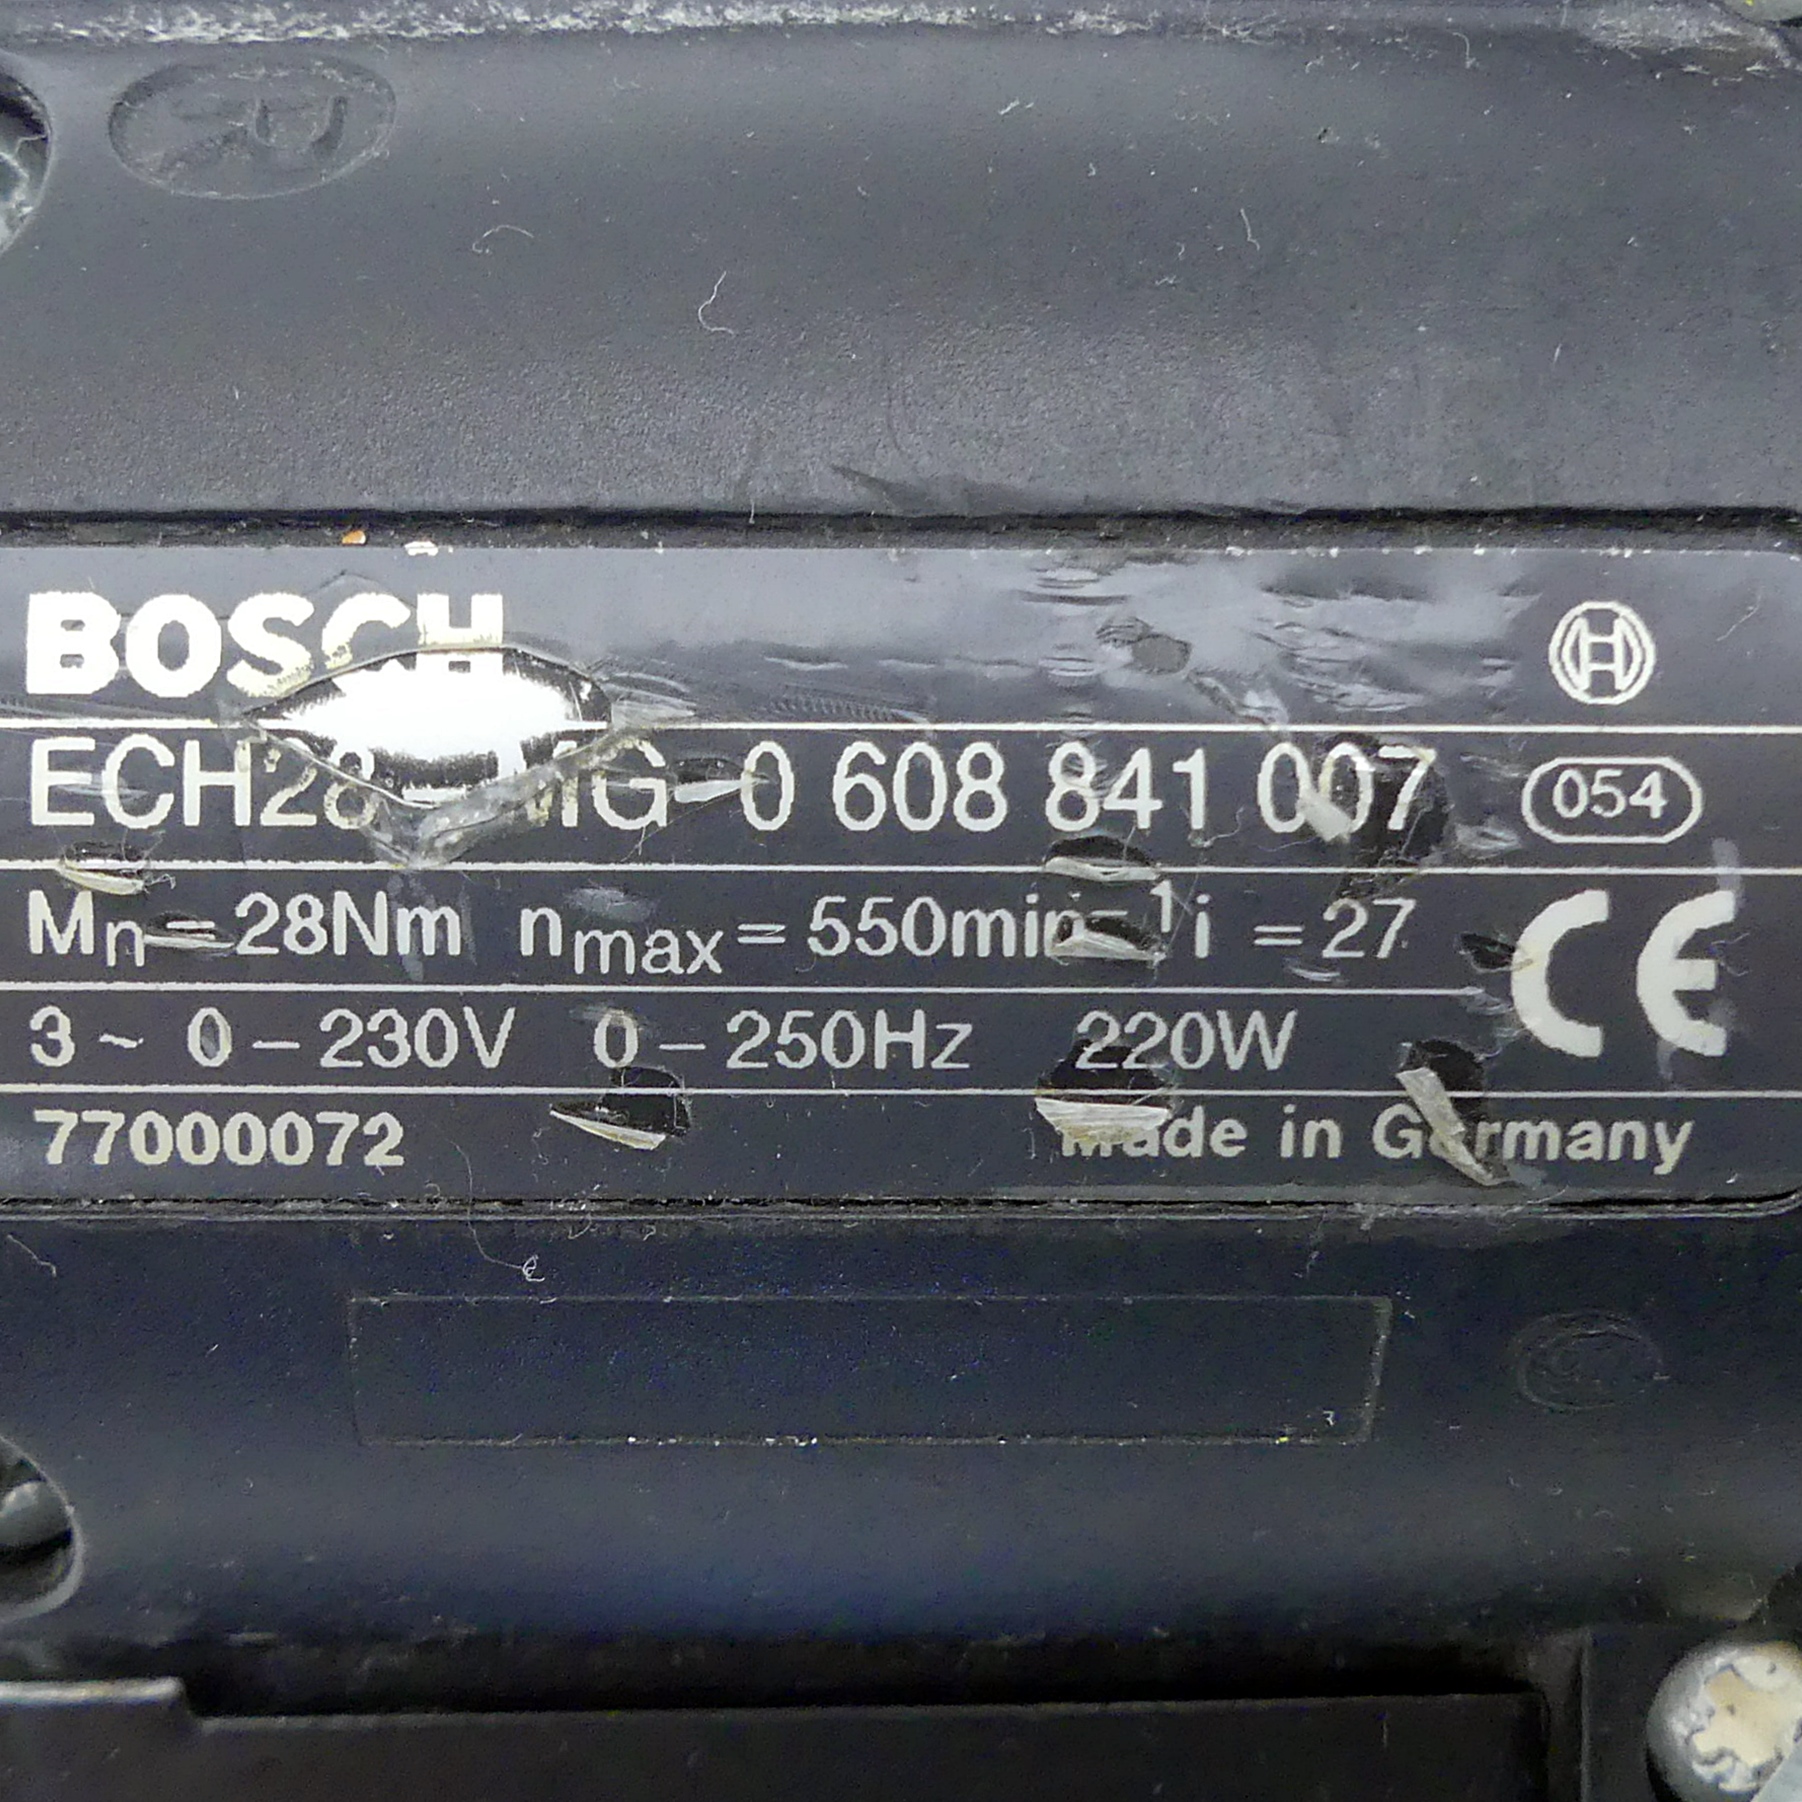 Handheld Nutrunner ECH20-MG 0 608 841 007 